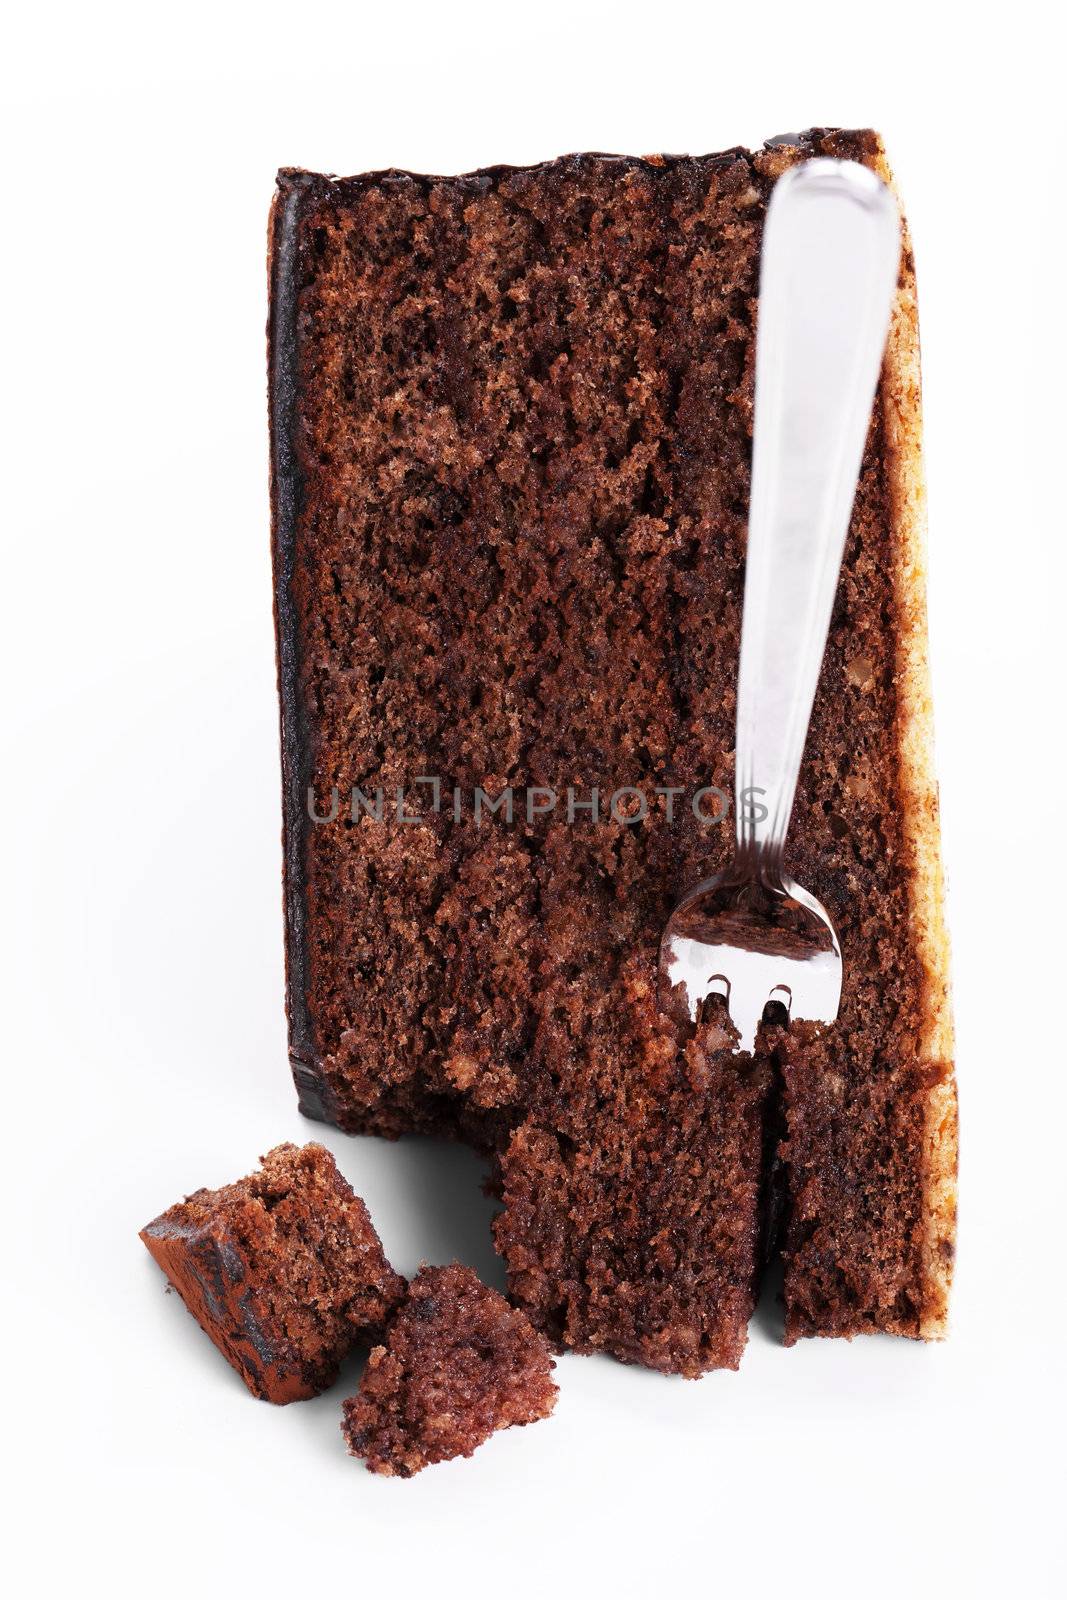 fork sticks in a broken chocolate cake on white background